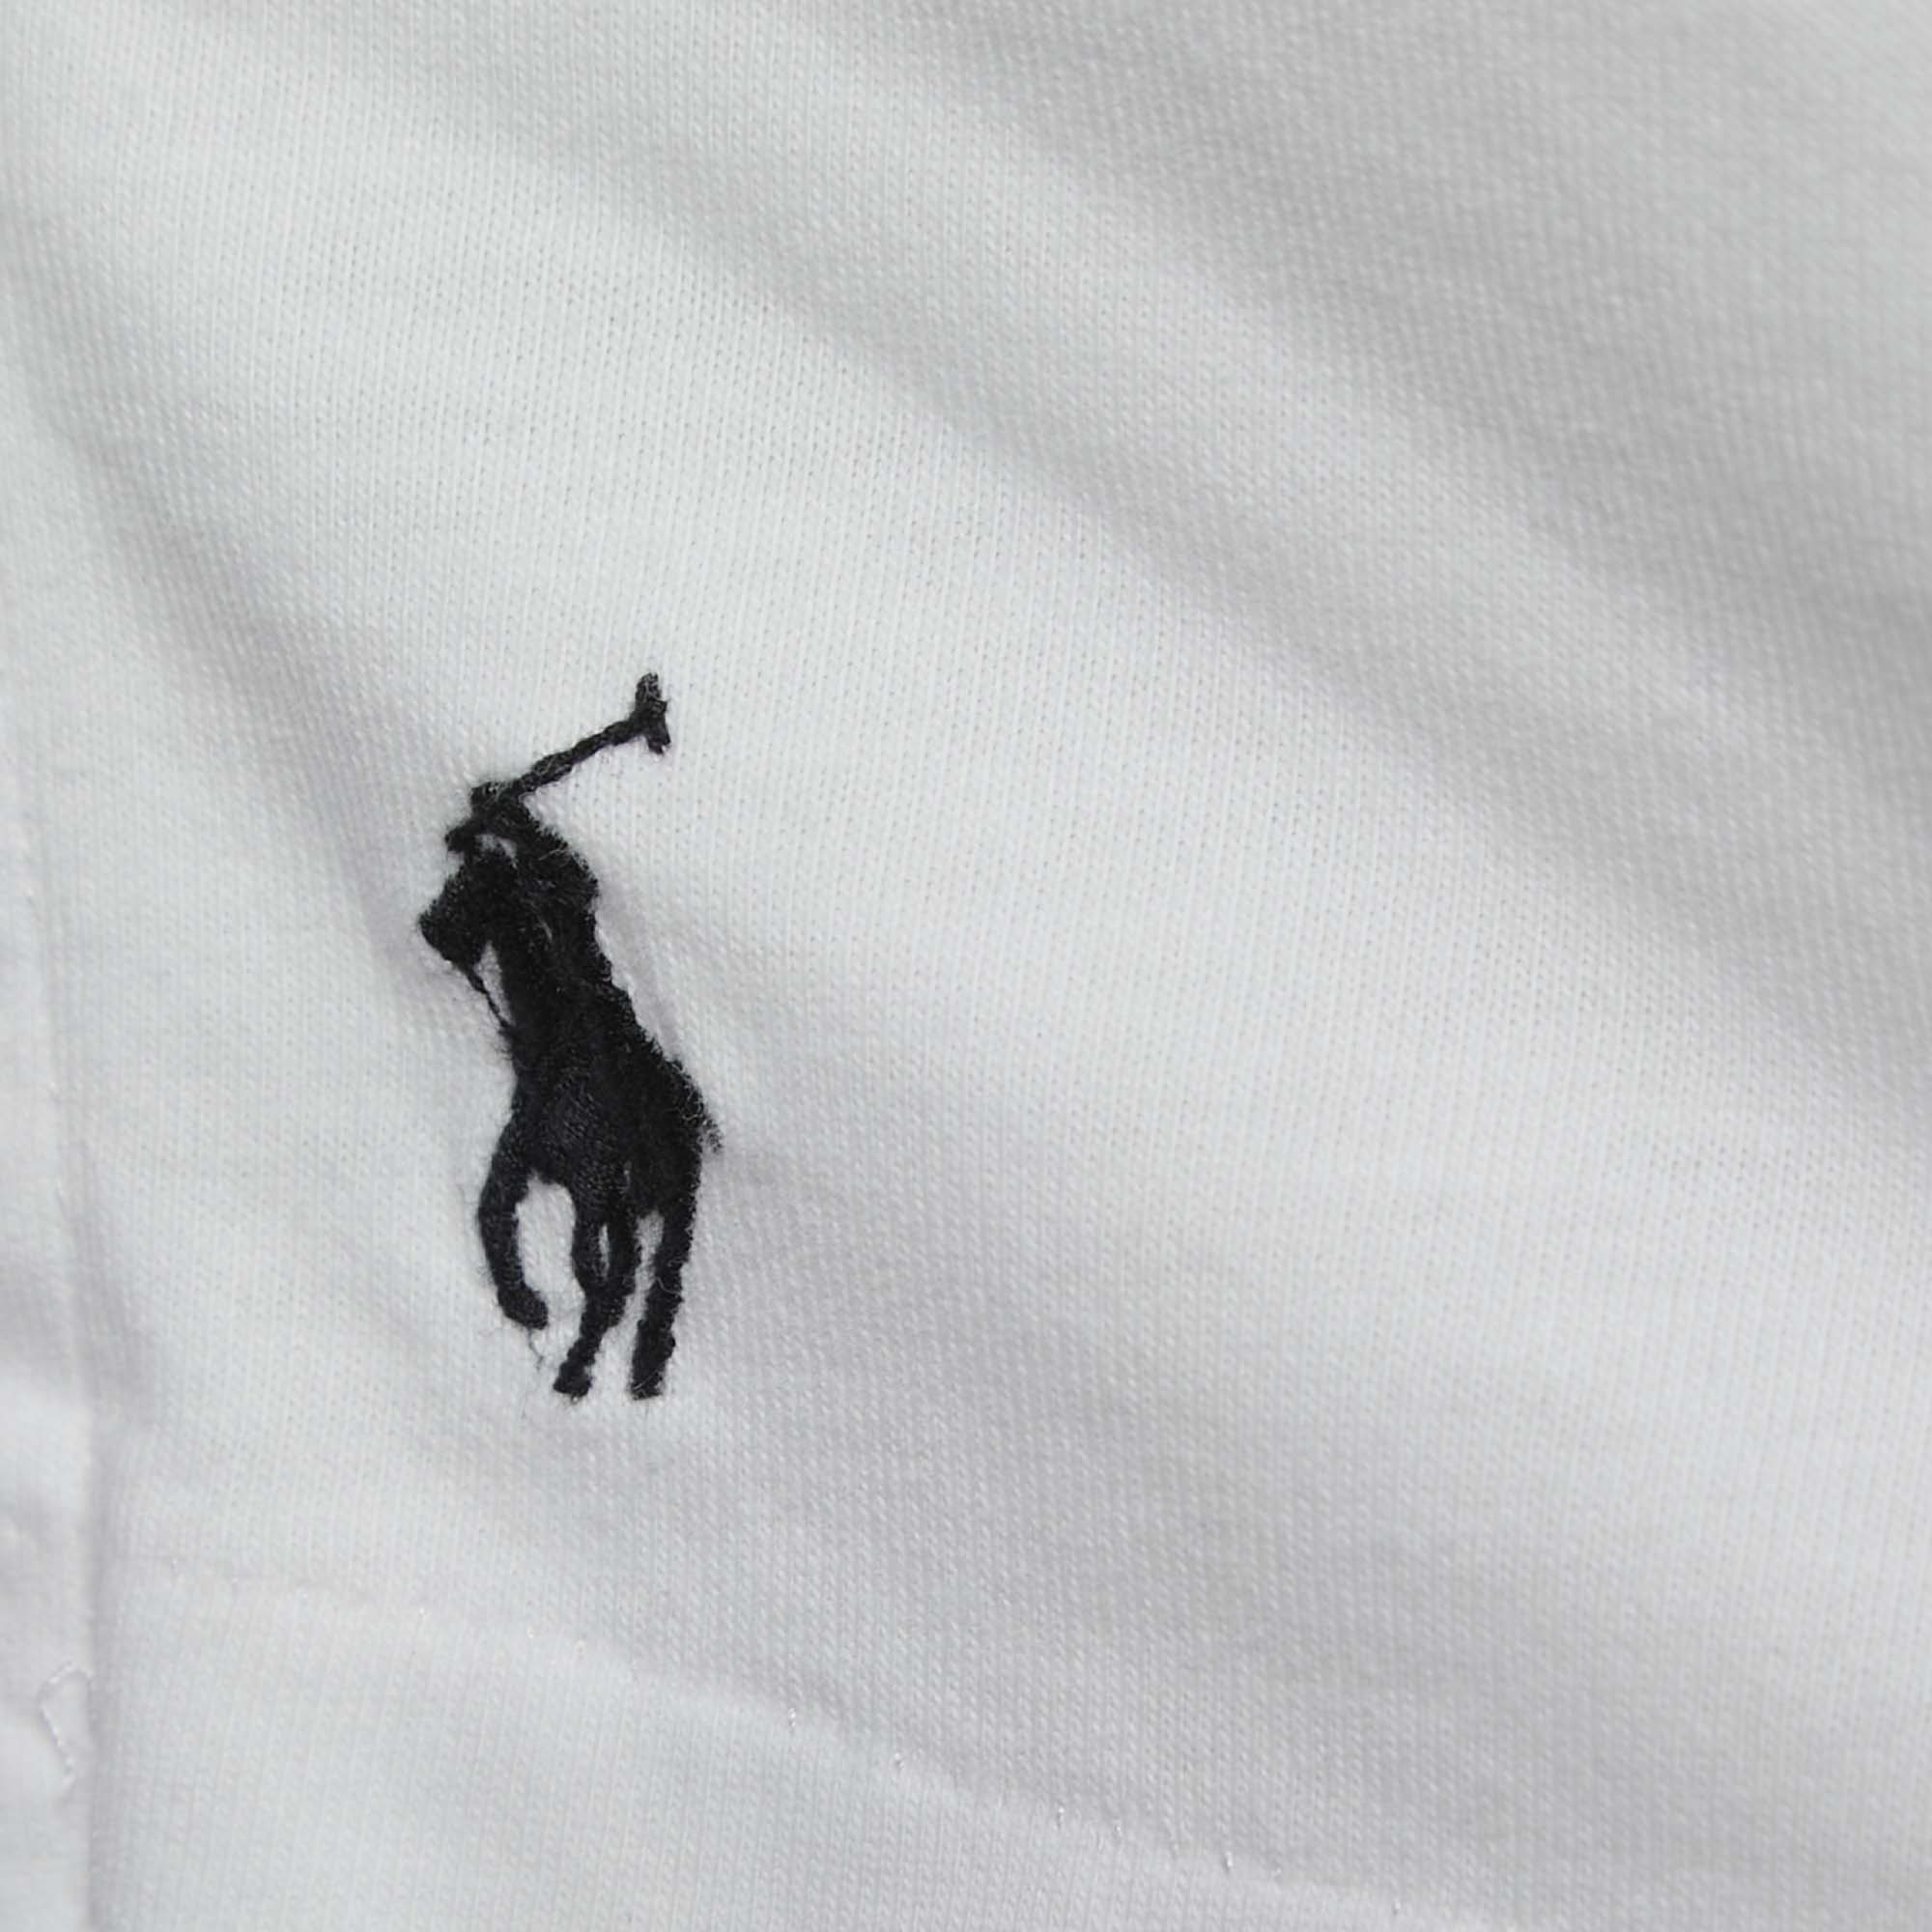 Polo Ralph Lauren White Cotton Knit Full Sleeve T-Shirt L